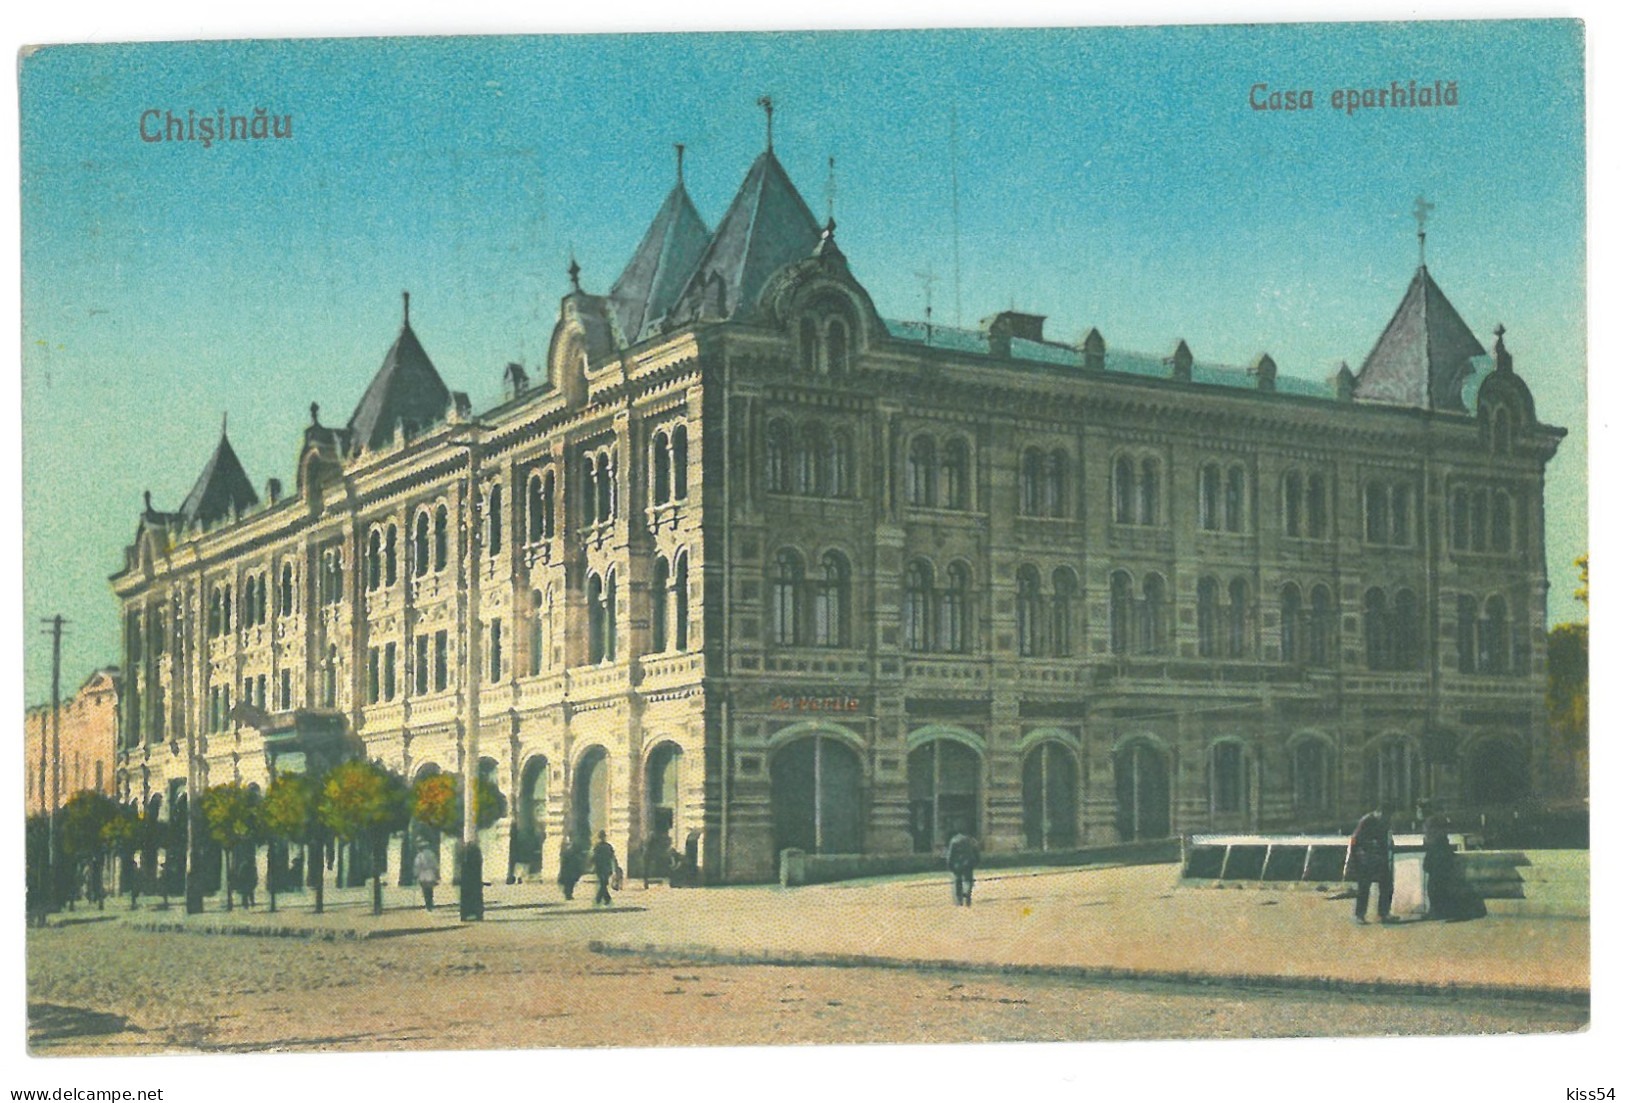 MOL 1 - 16270 CHISINAU, Casa Eparhiala, Moldova - Old Postcard - Used - 1925 - Moldavia